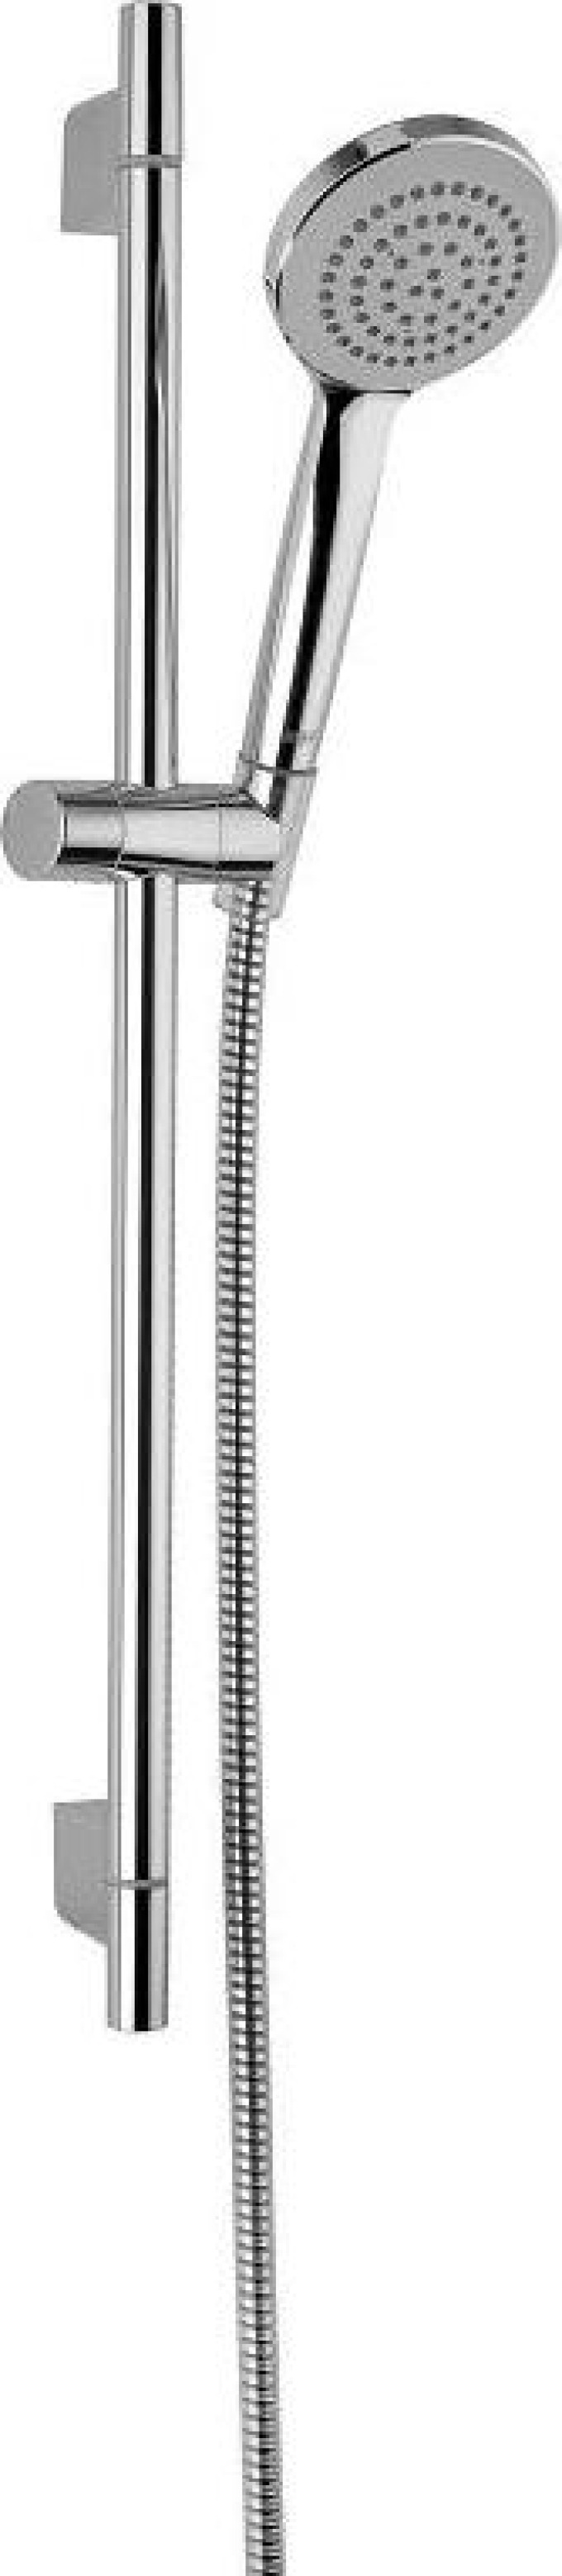 Sprchová souprava Optiline 120/600 tyč 60 cm, hadice 160 cm PM03047W